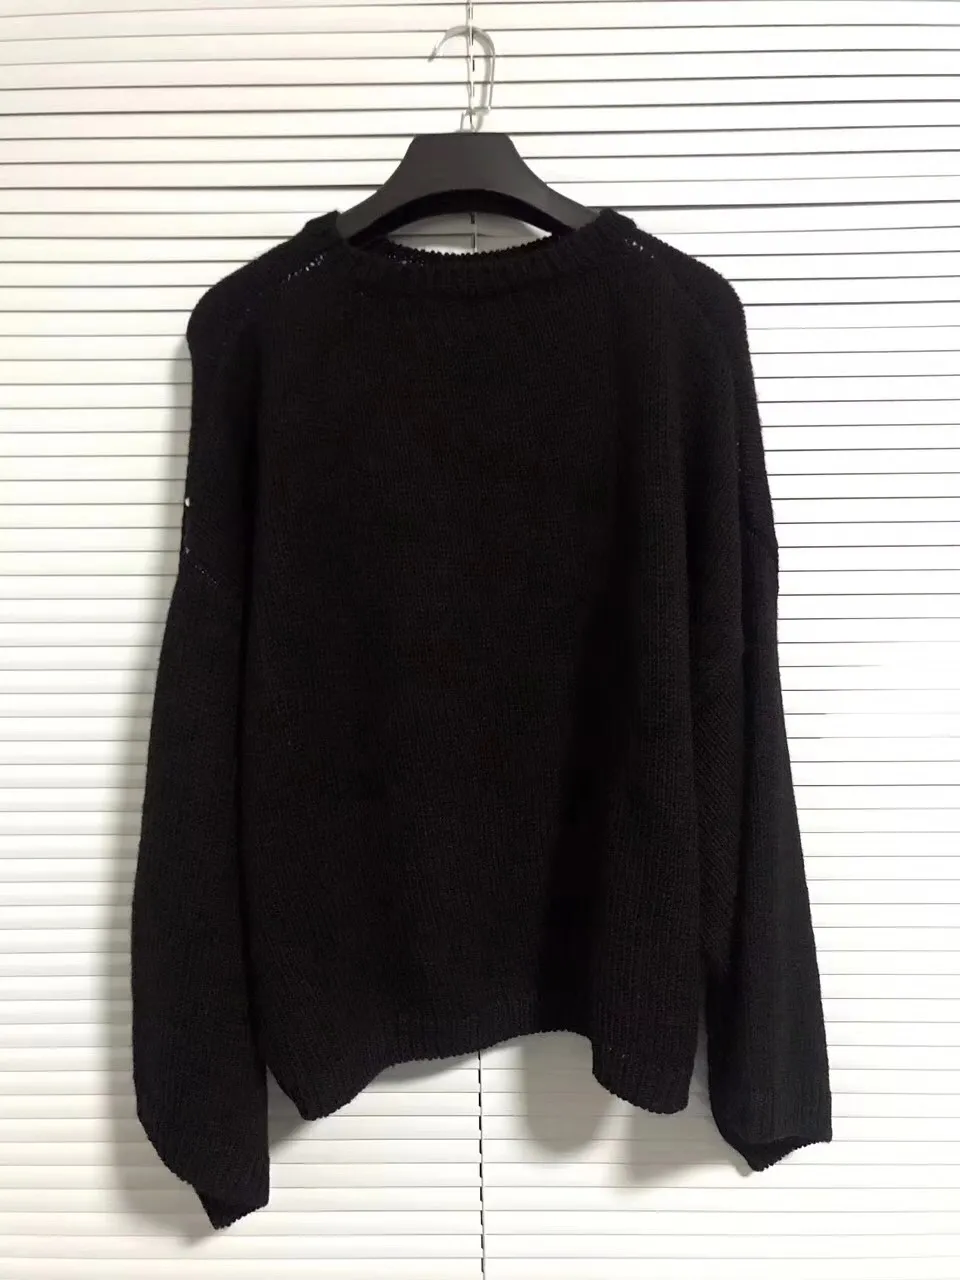 Fashion-2018 new Oversized Sweater hoodies Men Women Unisexual Pocket Knit Shirt Fashion Black Long Sleeve Free Shipping 888